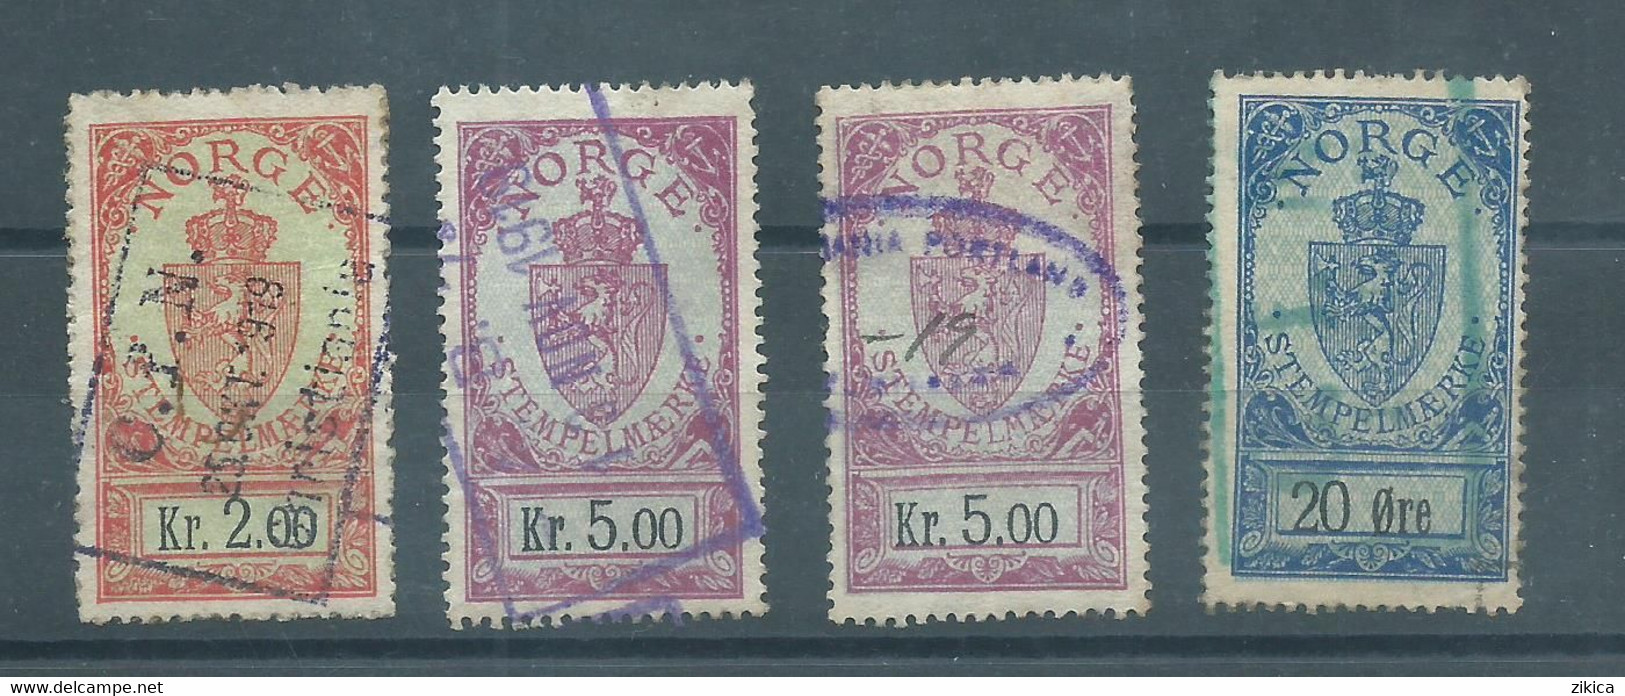 LOT 4 Stamps - NORWAY Norwegen Stempelmarke Documentary Stamps - Fiscali